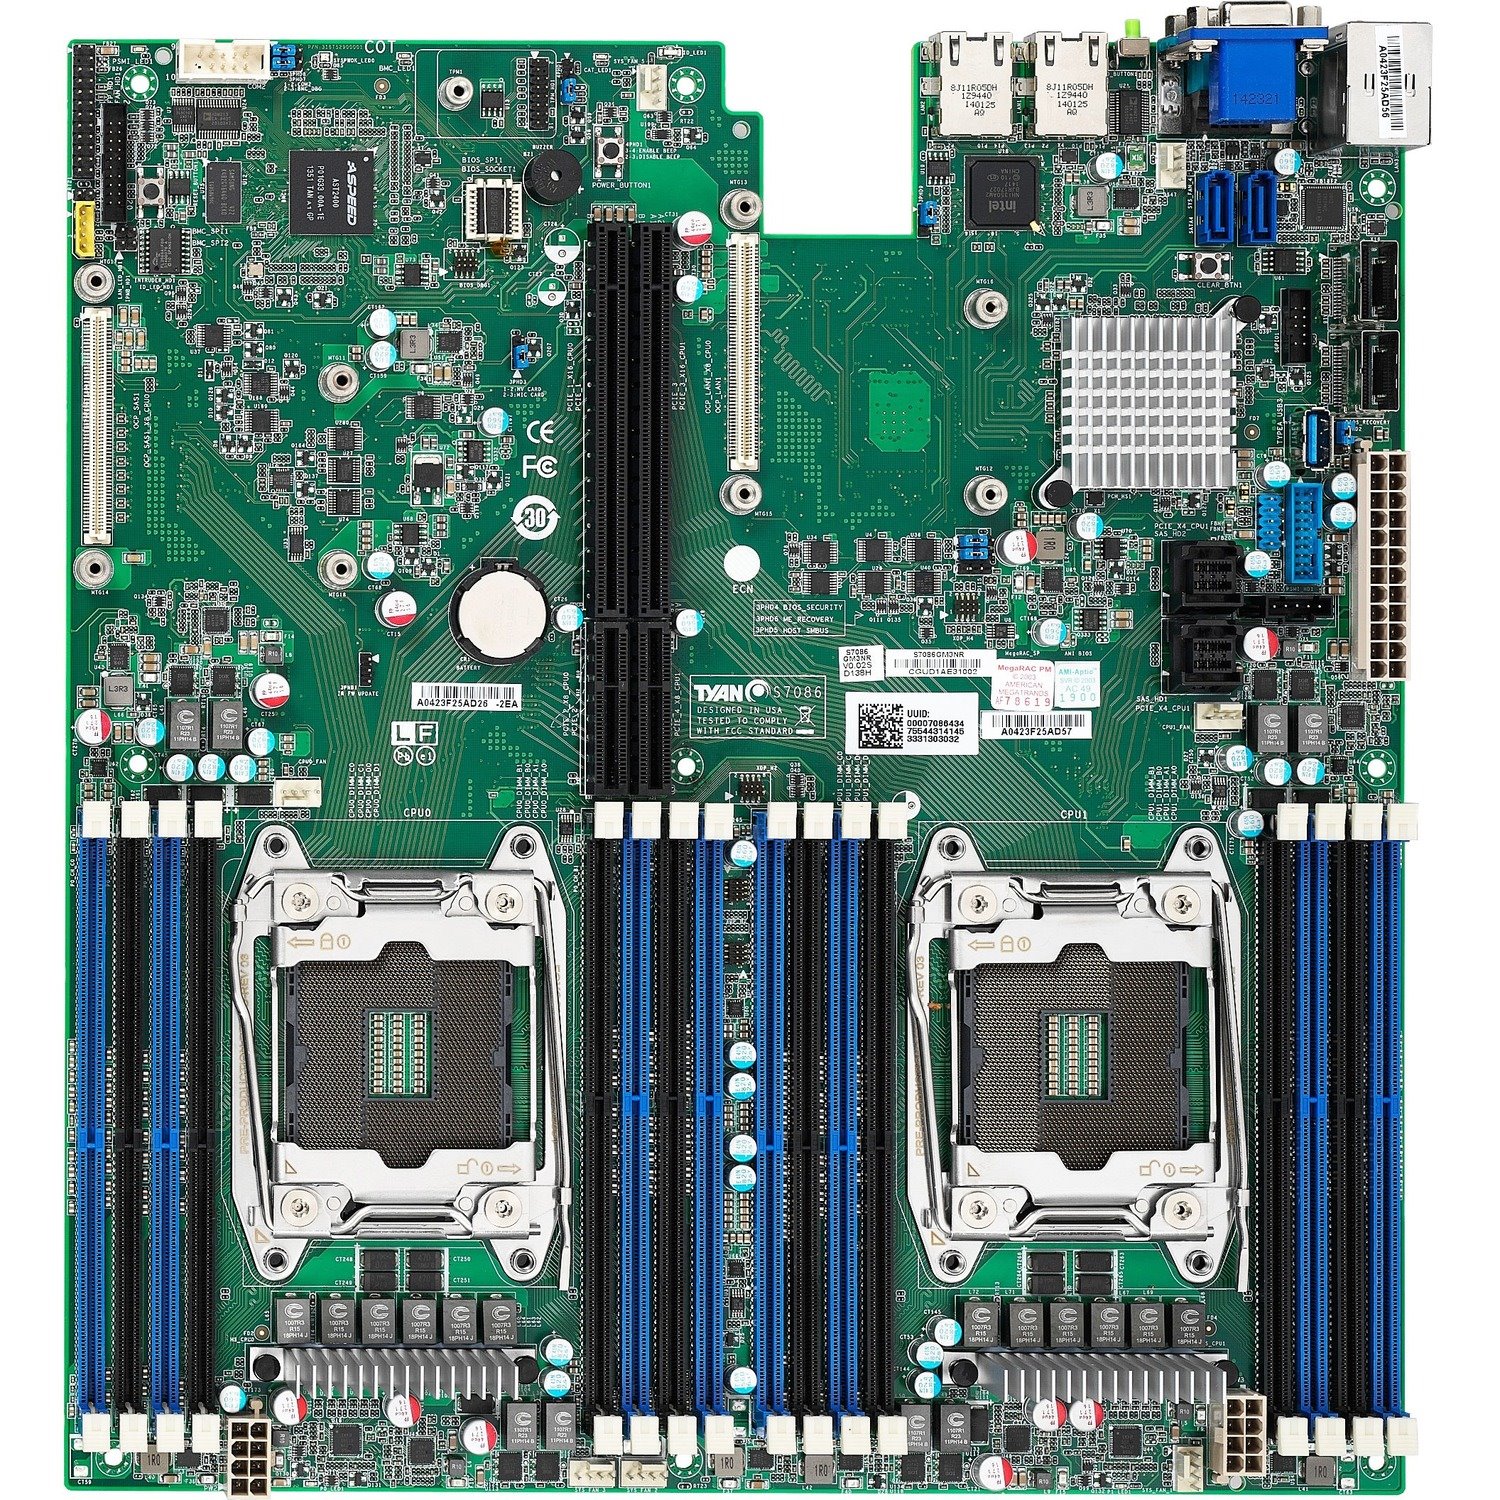 Tyan S7086 Server Motherboard - Intel C612 Chipset - Socket R LGA-2011 - Extended ATX